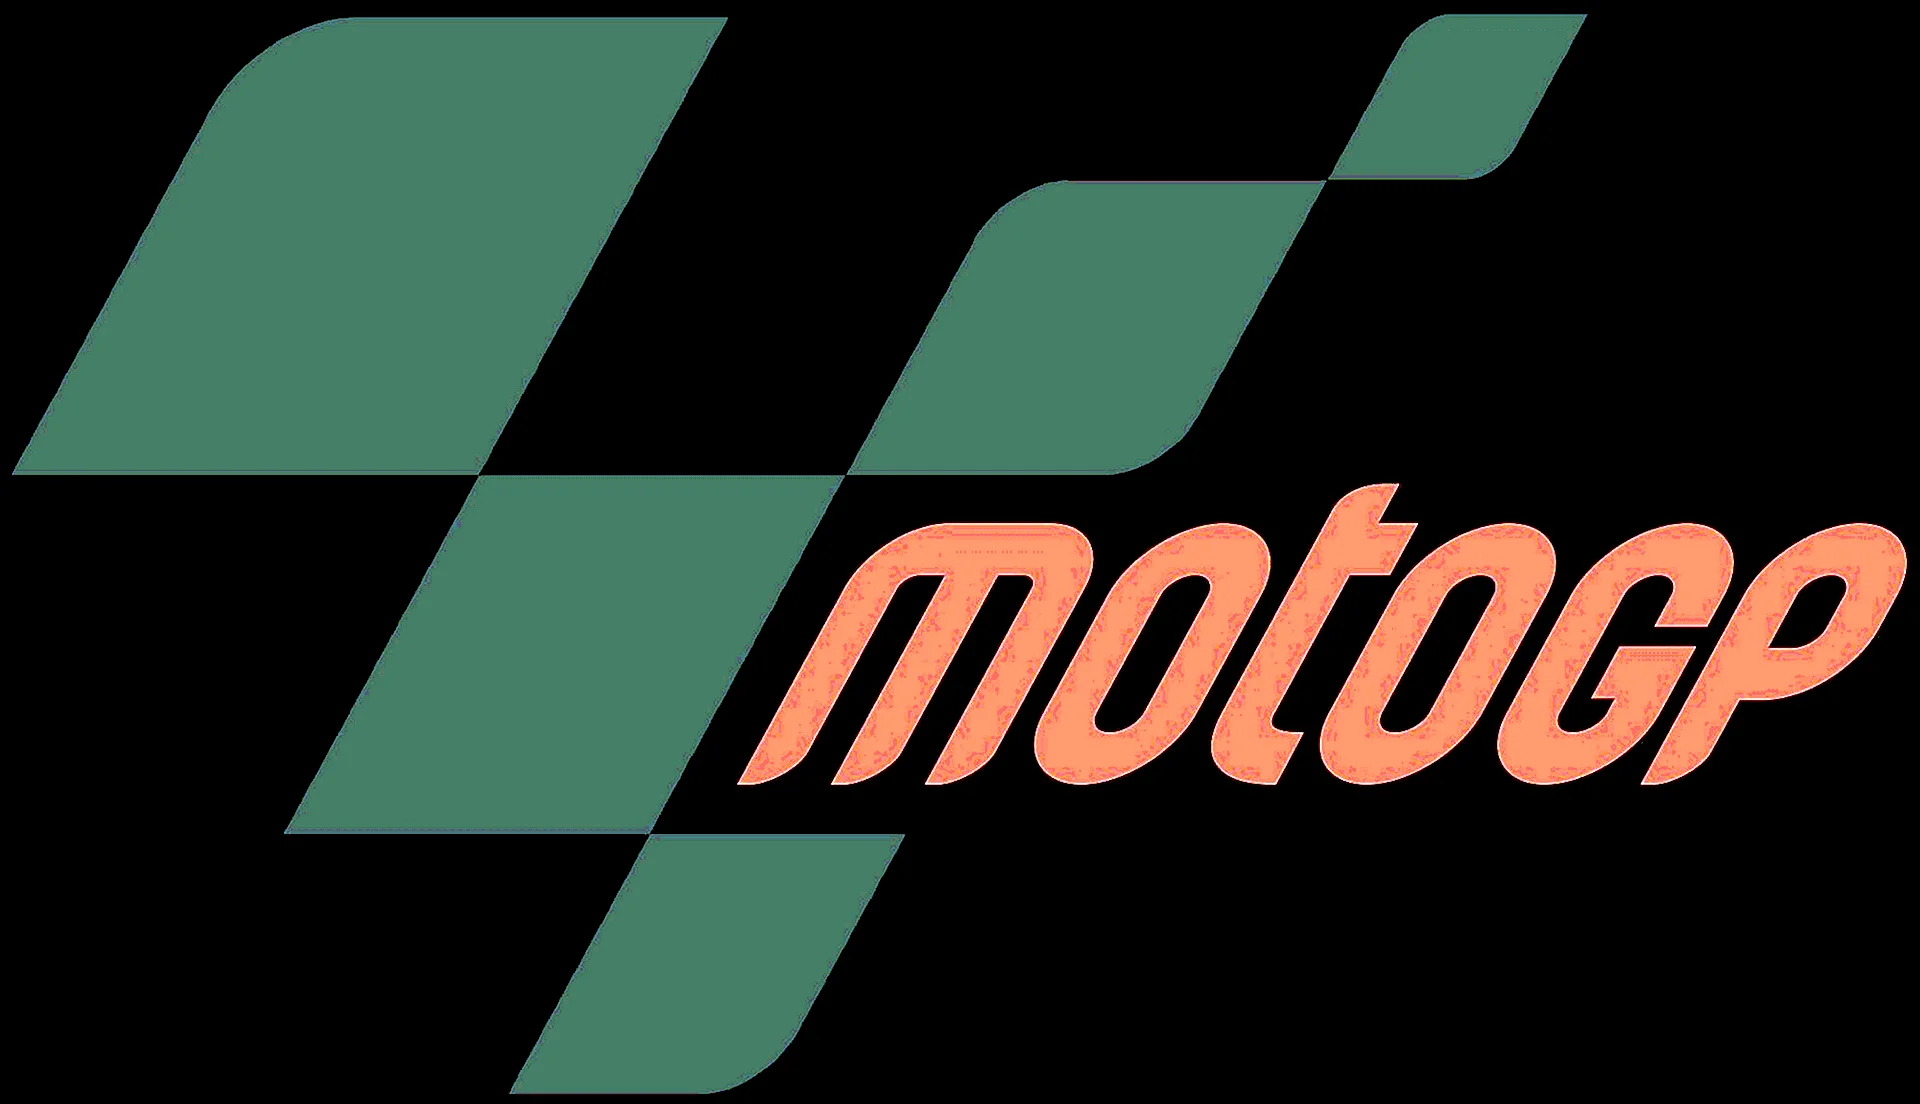 Motogp Logo Wallpaper